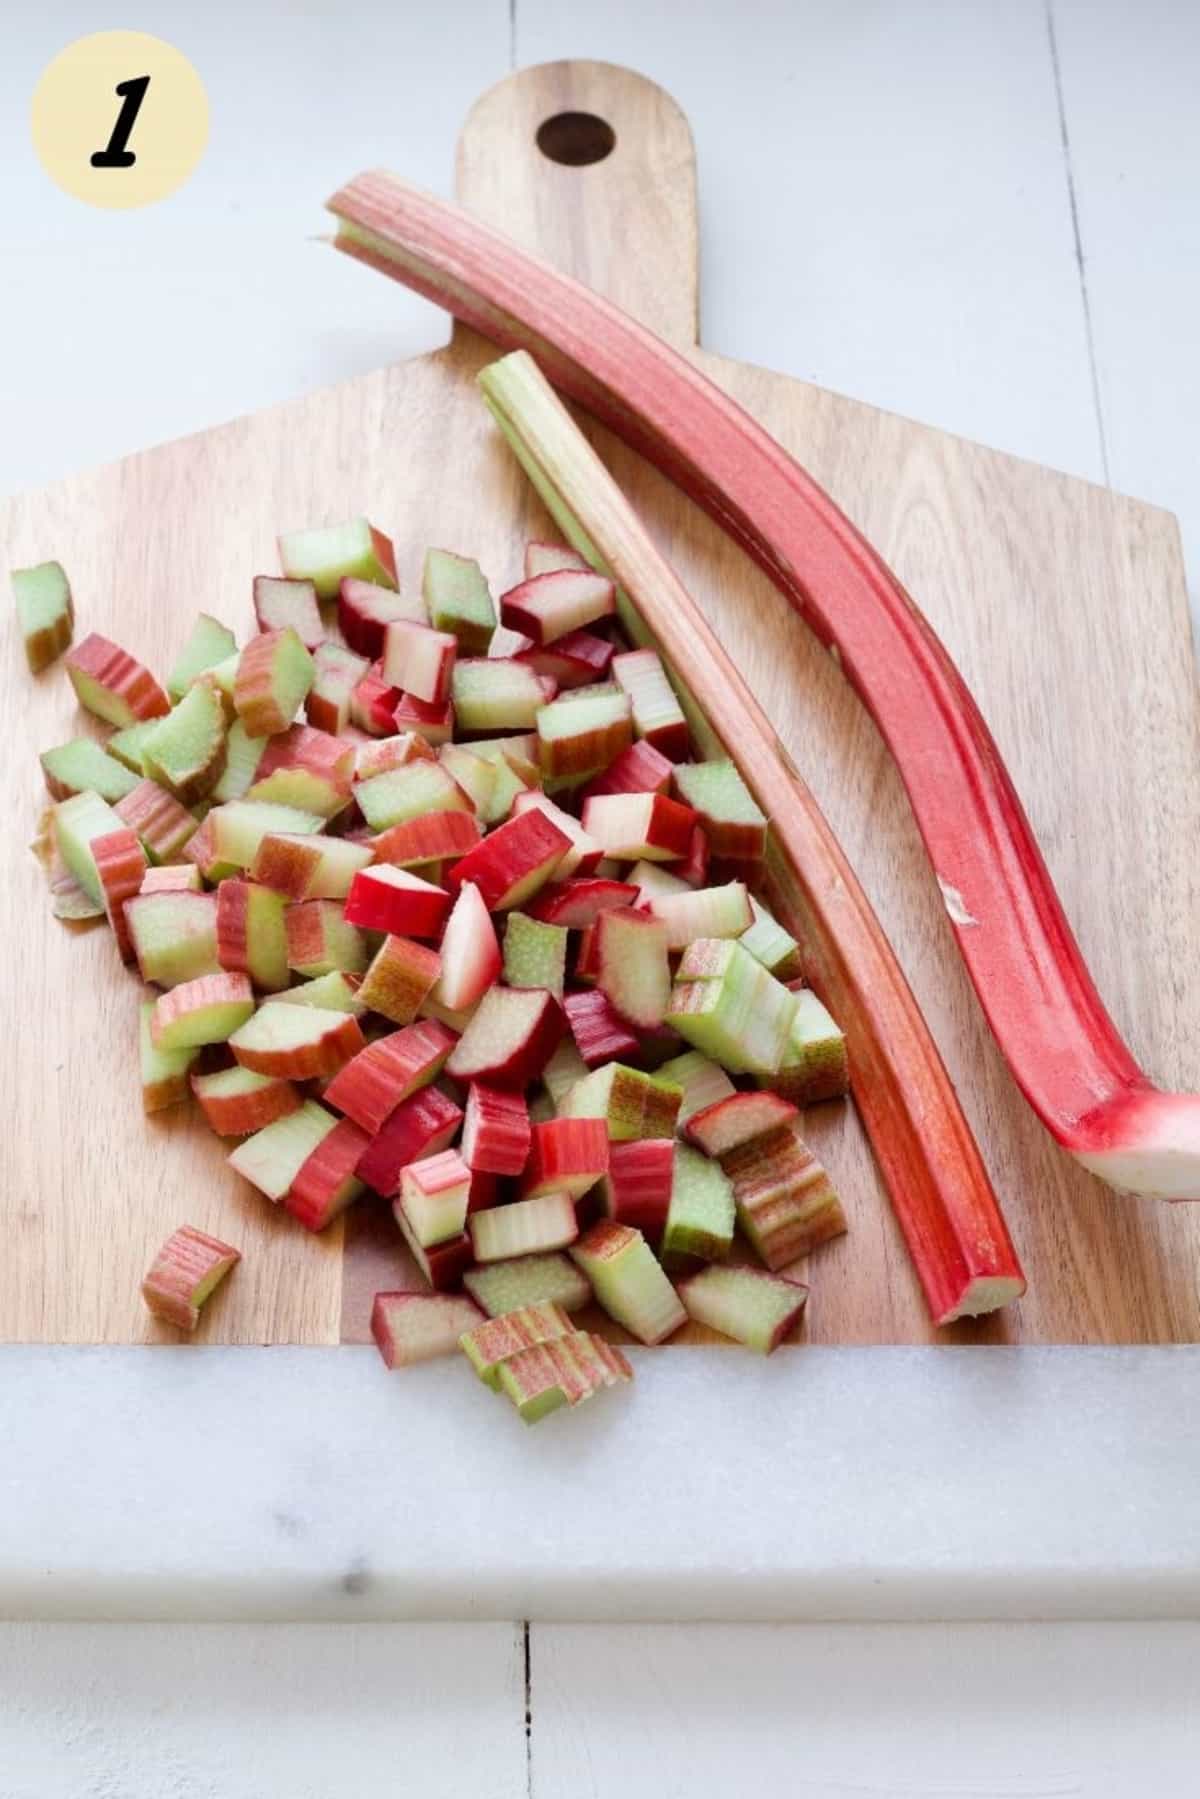 Raw rhubarb on a cutting board, partially chopped into chunks.